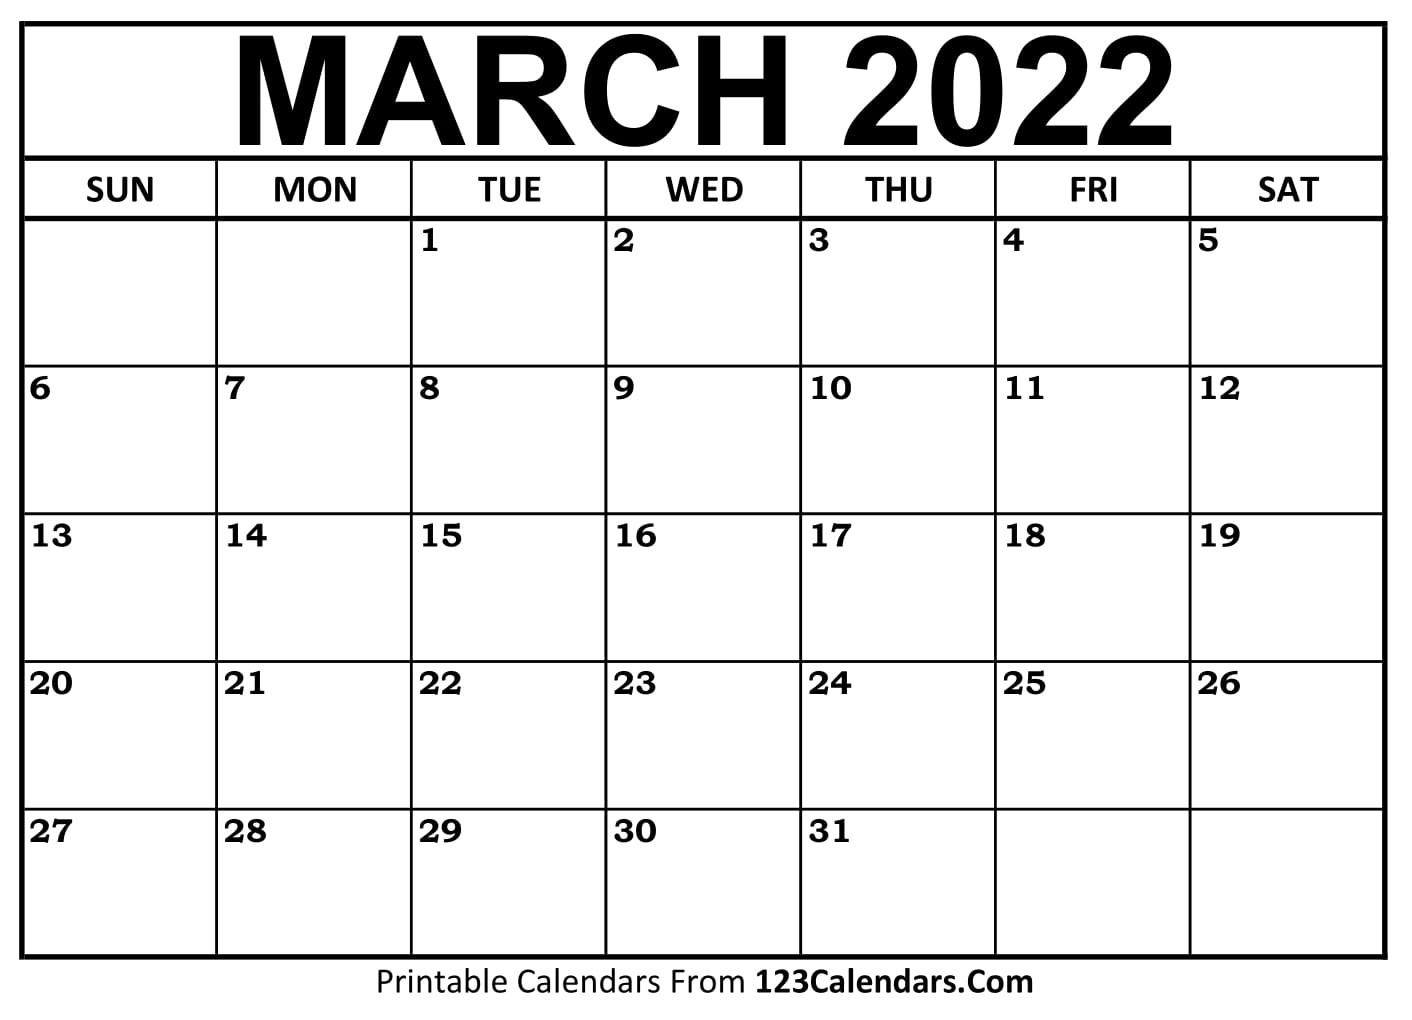 March Blank Calendar 2022 Printable March 2022 Calendar Templates - 123Calendars.com